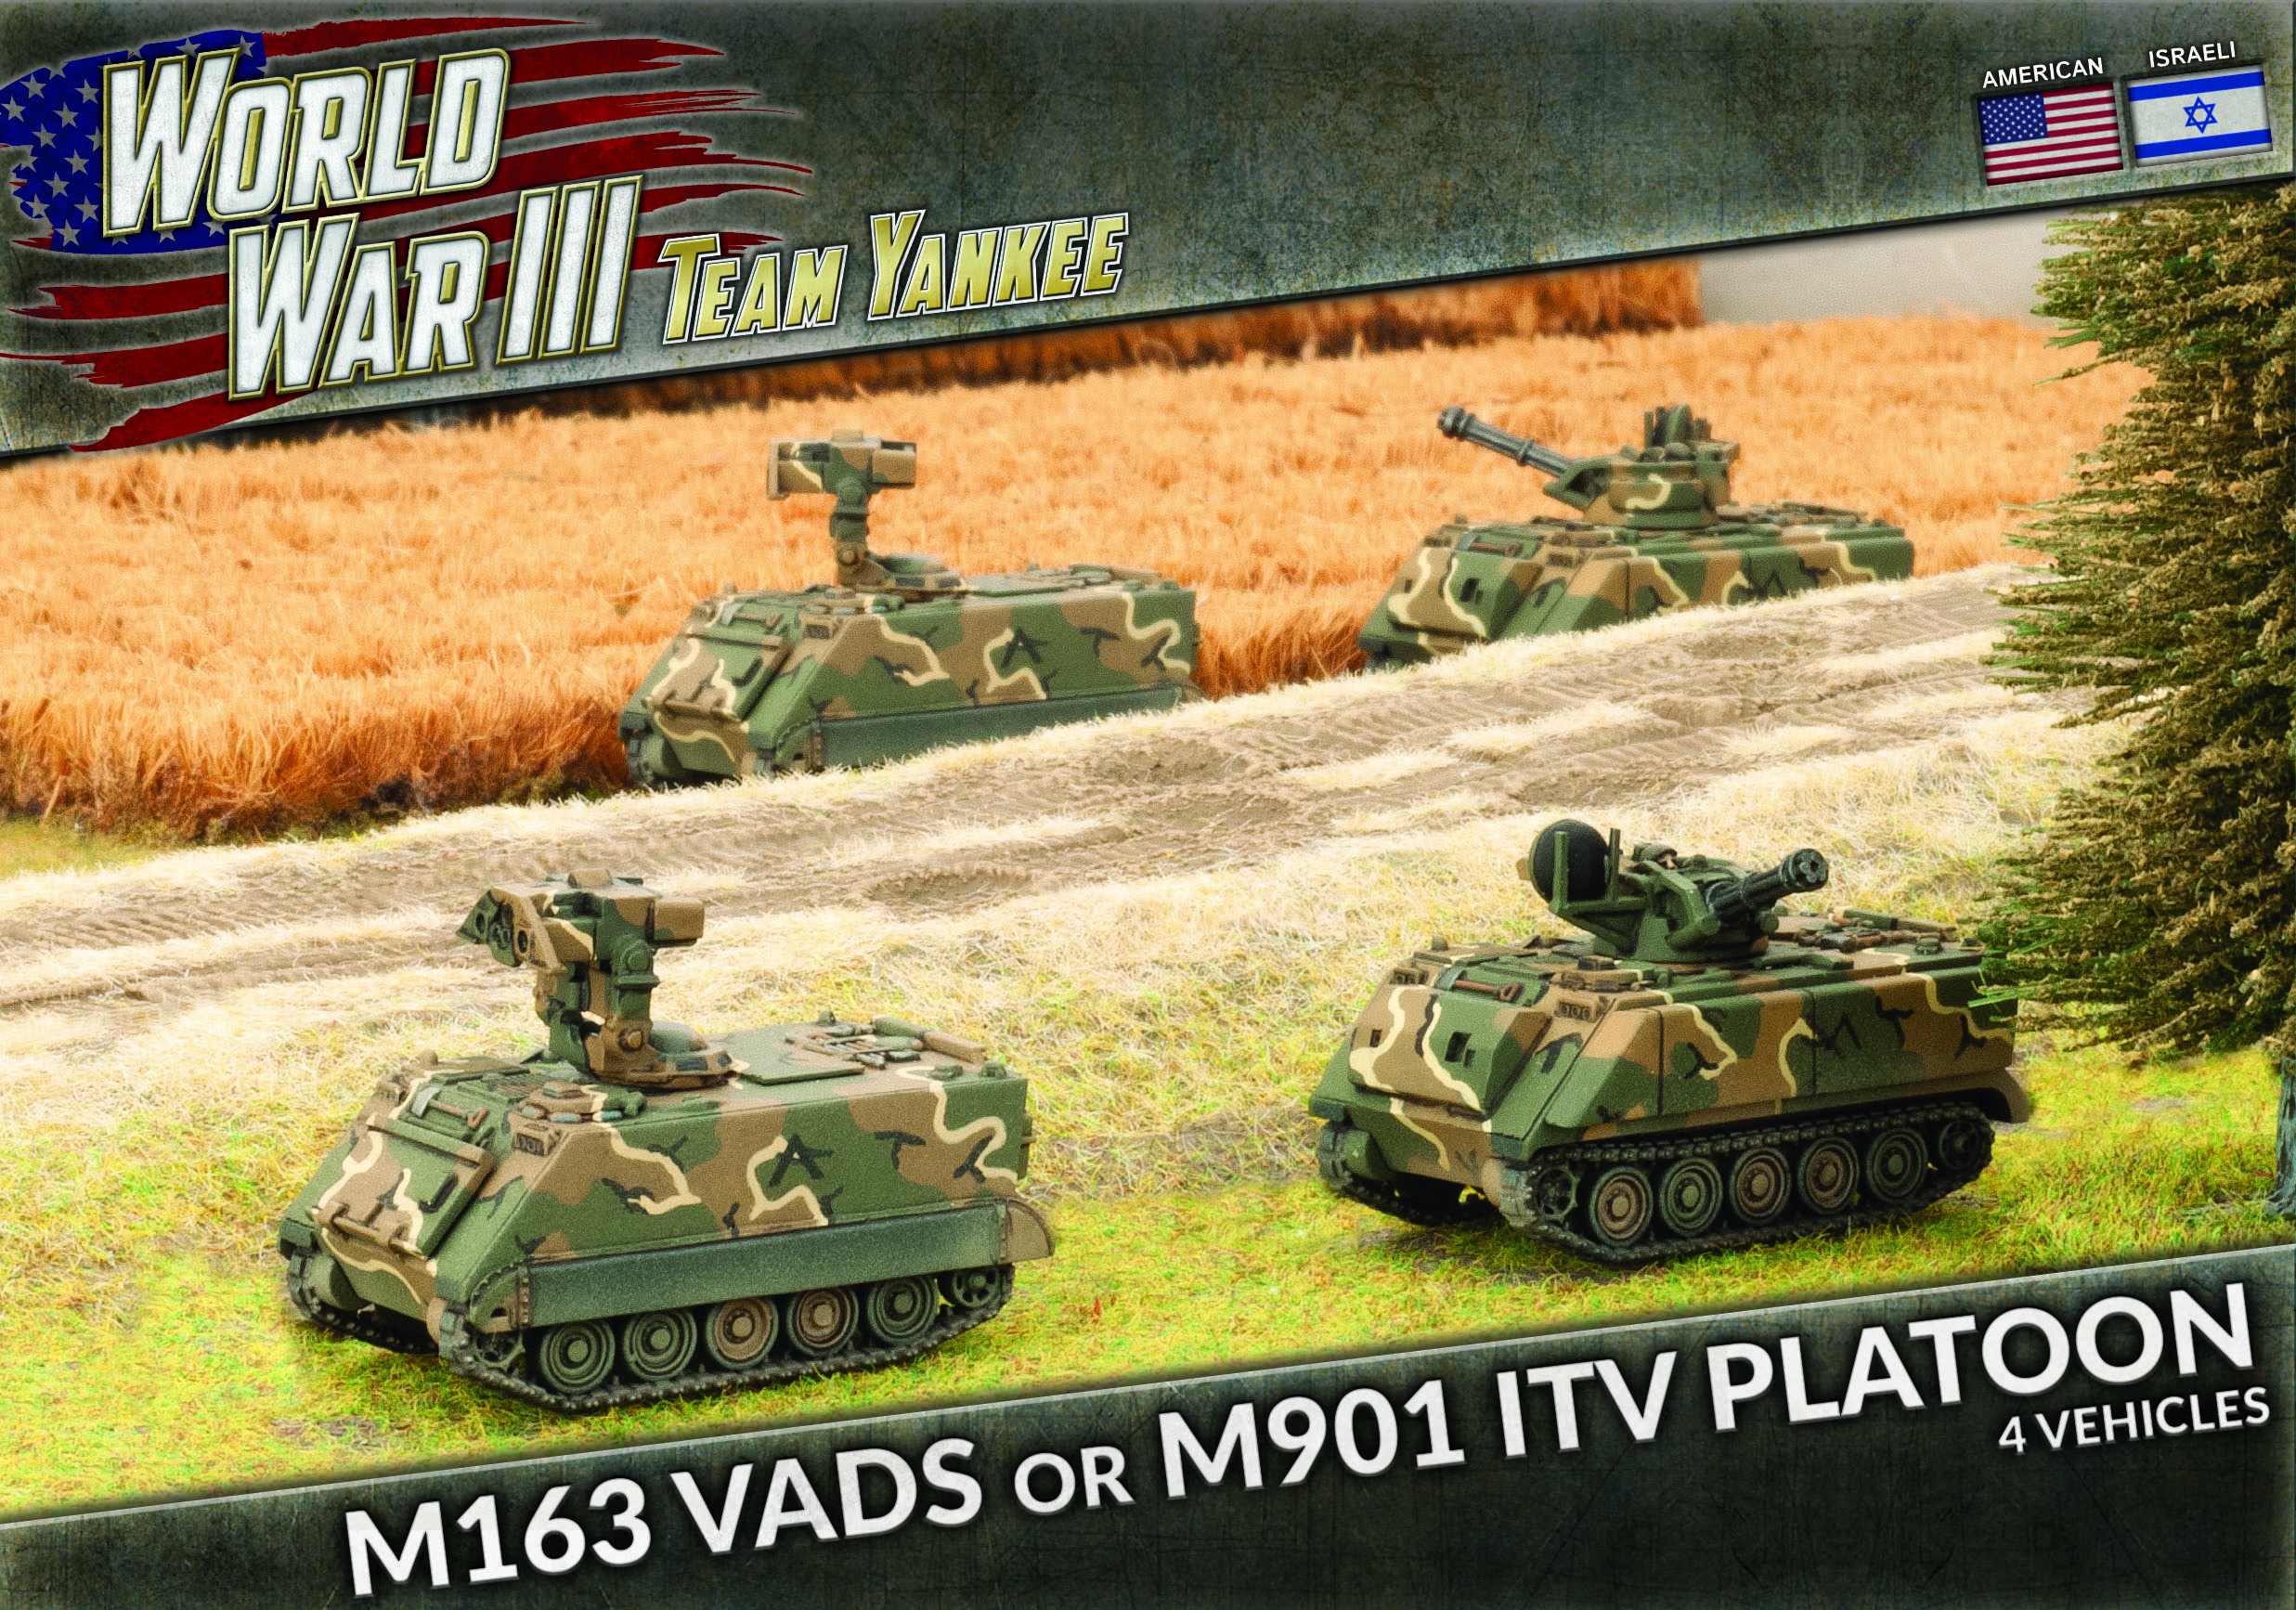 Oldsarges Wargame And Model Blog Team Yankee M163 Vads And M901